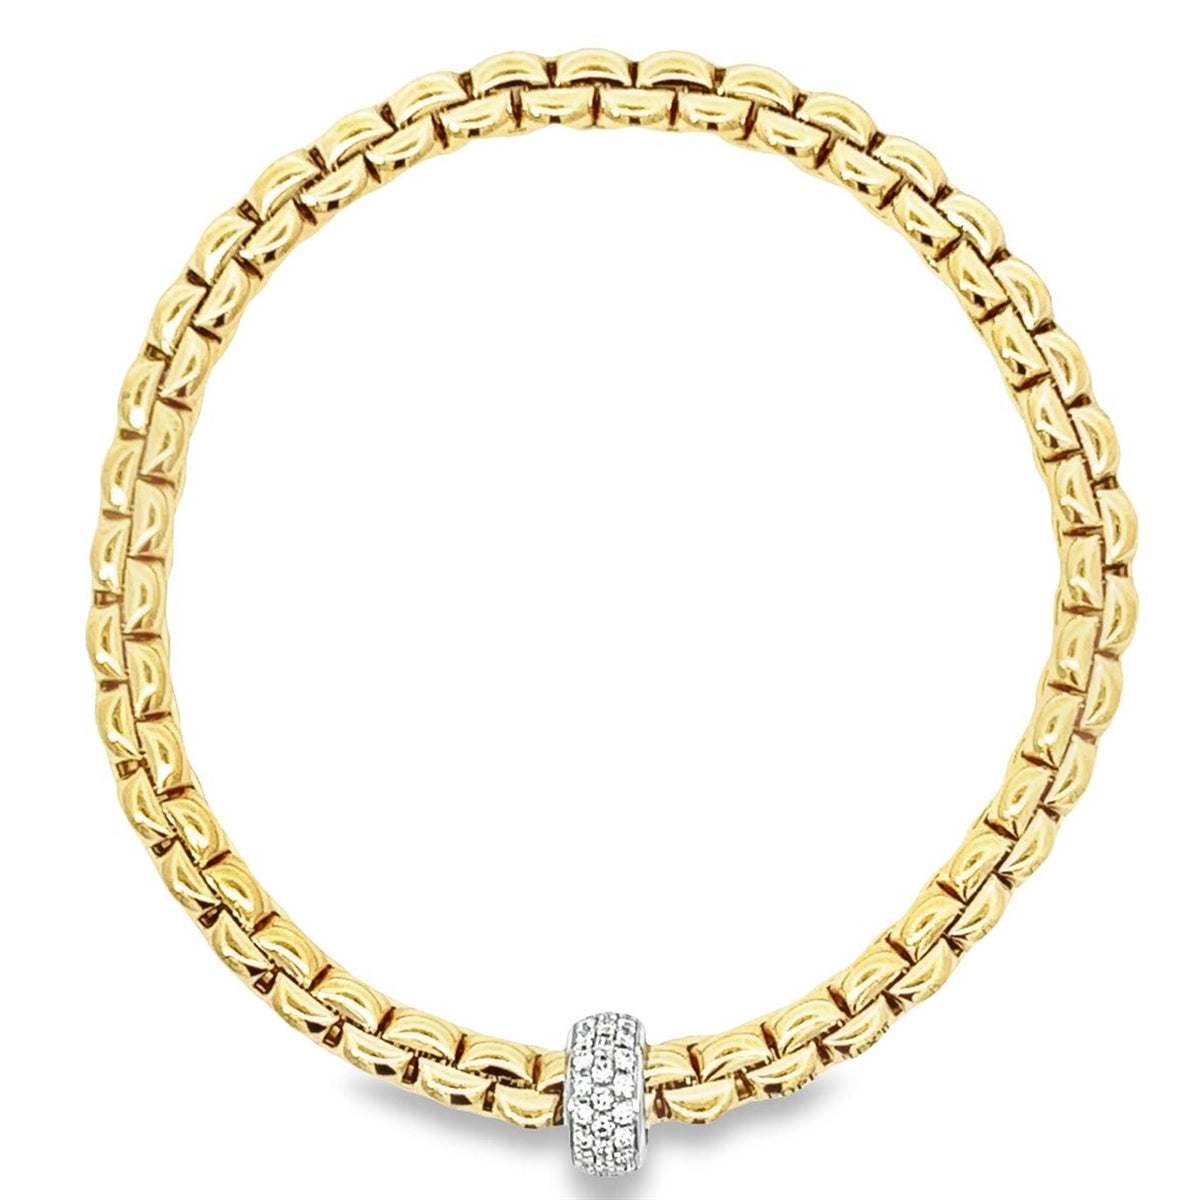 FOPE 18K Yellow Italian Gold EKA Flexible Bracelet with .37cttw Diamonds